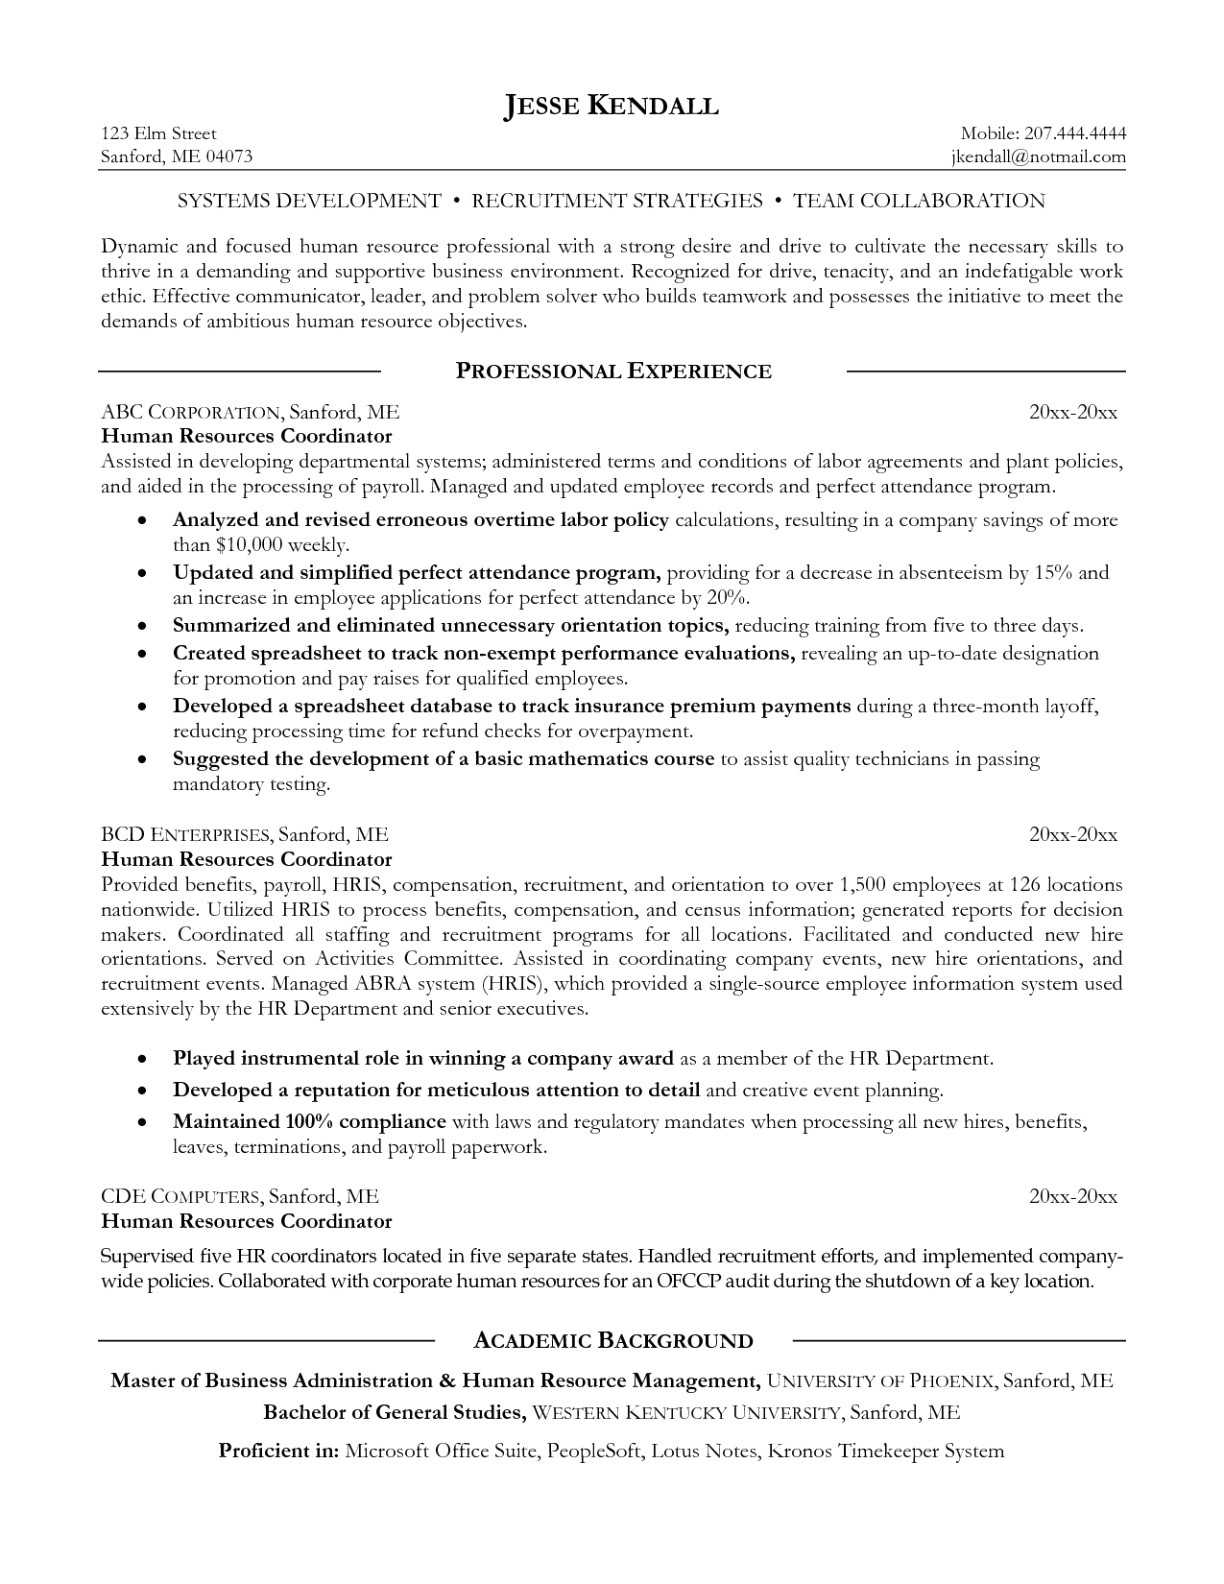 sap basis administration cover letter